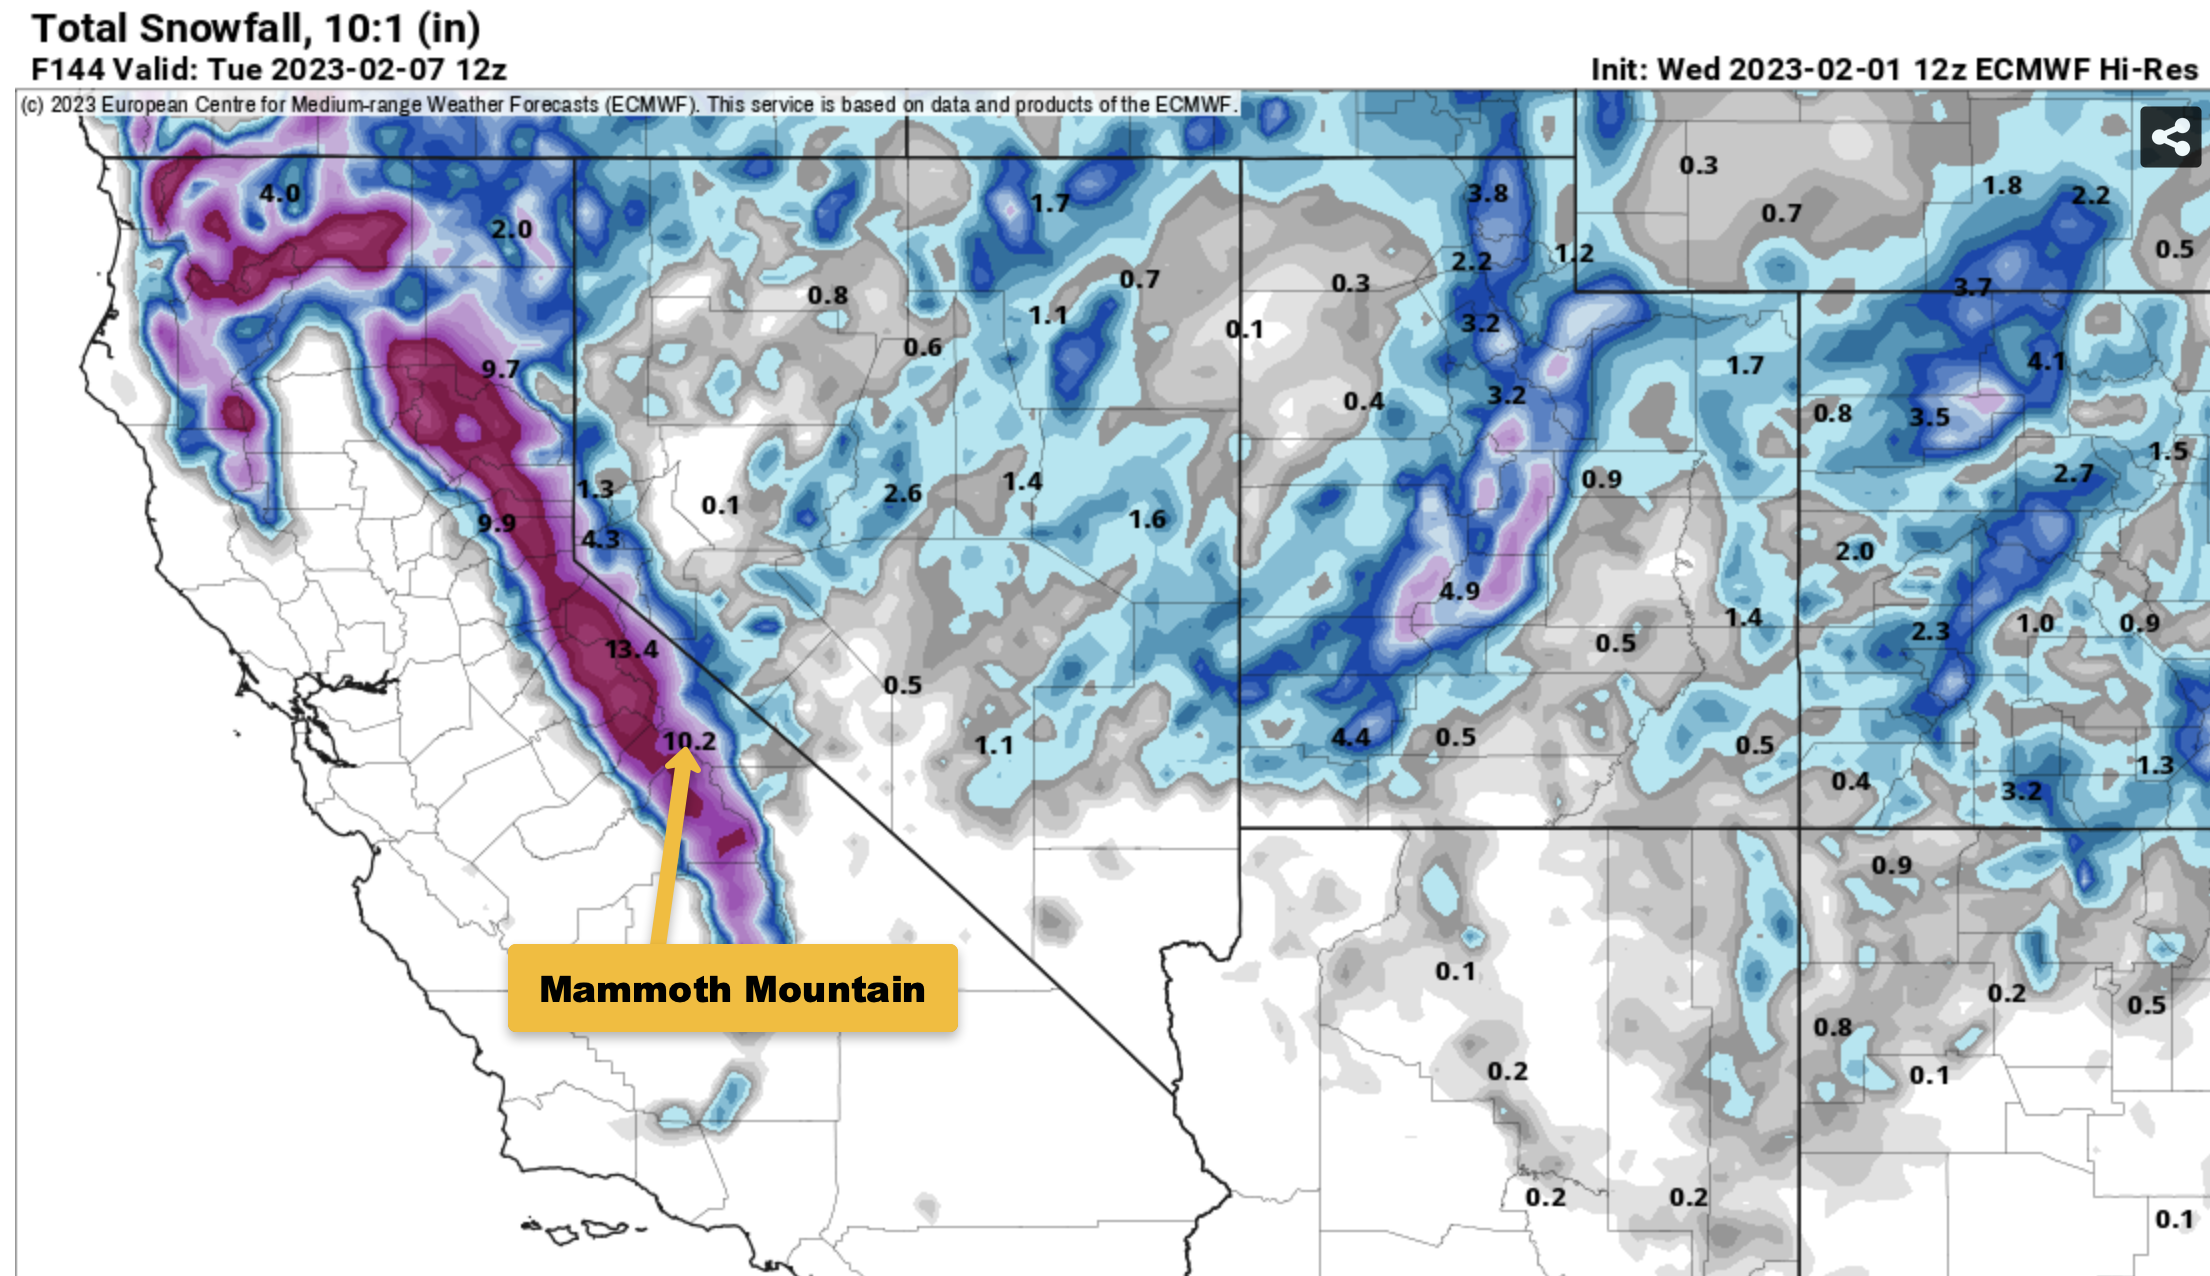 Snowfall Forecast for Mammoth Mountain